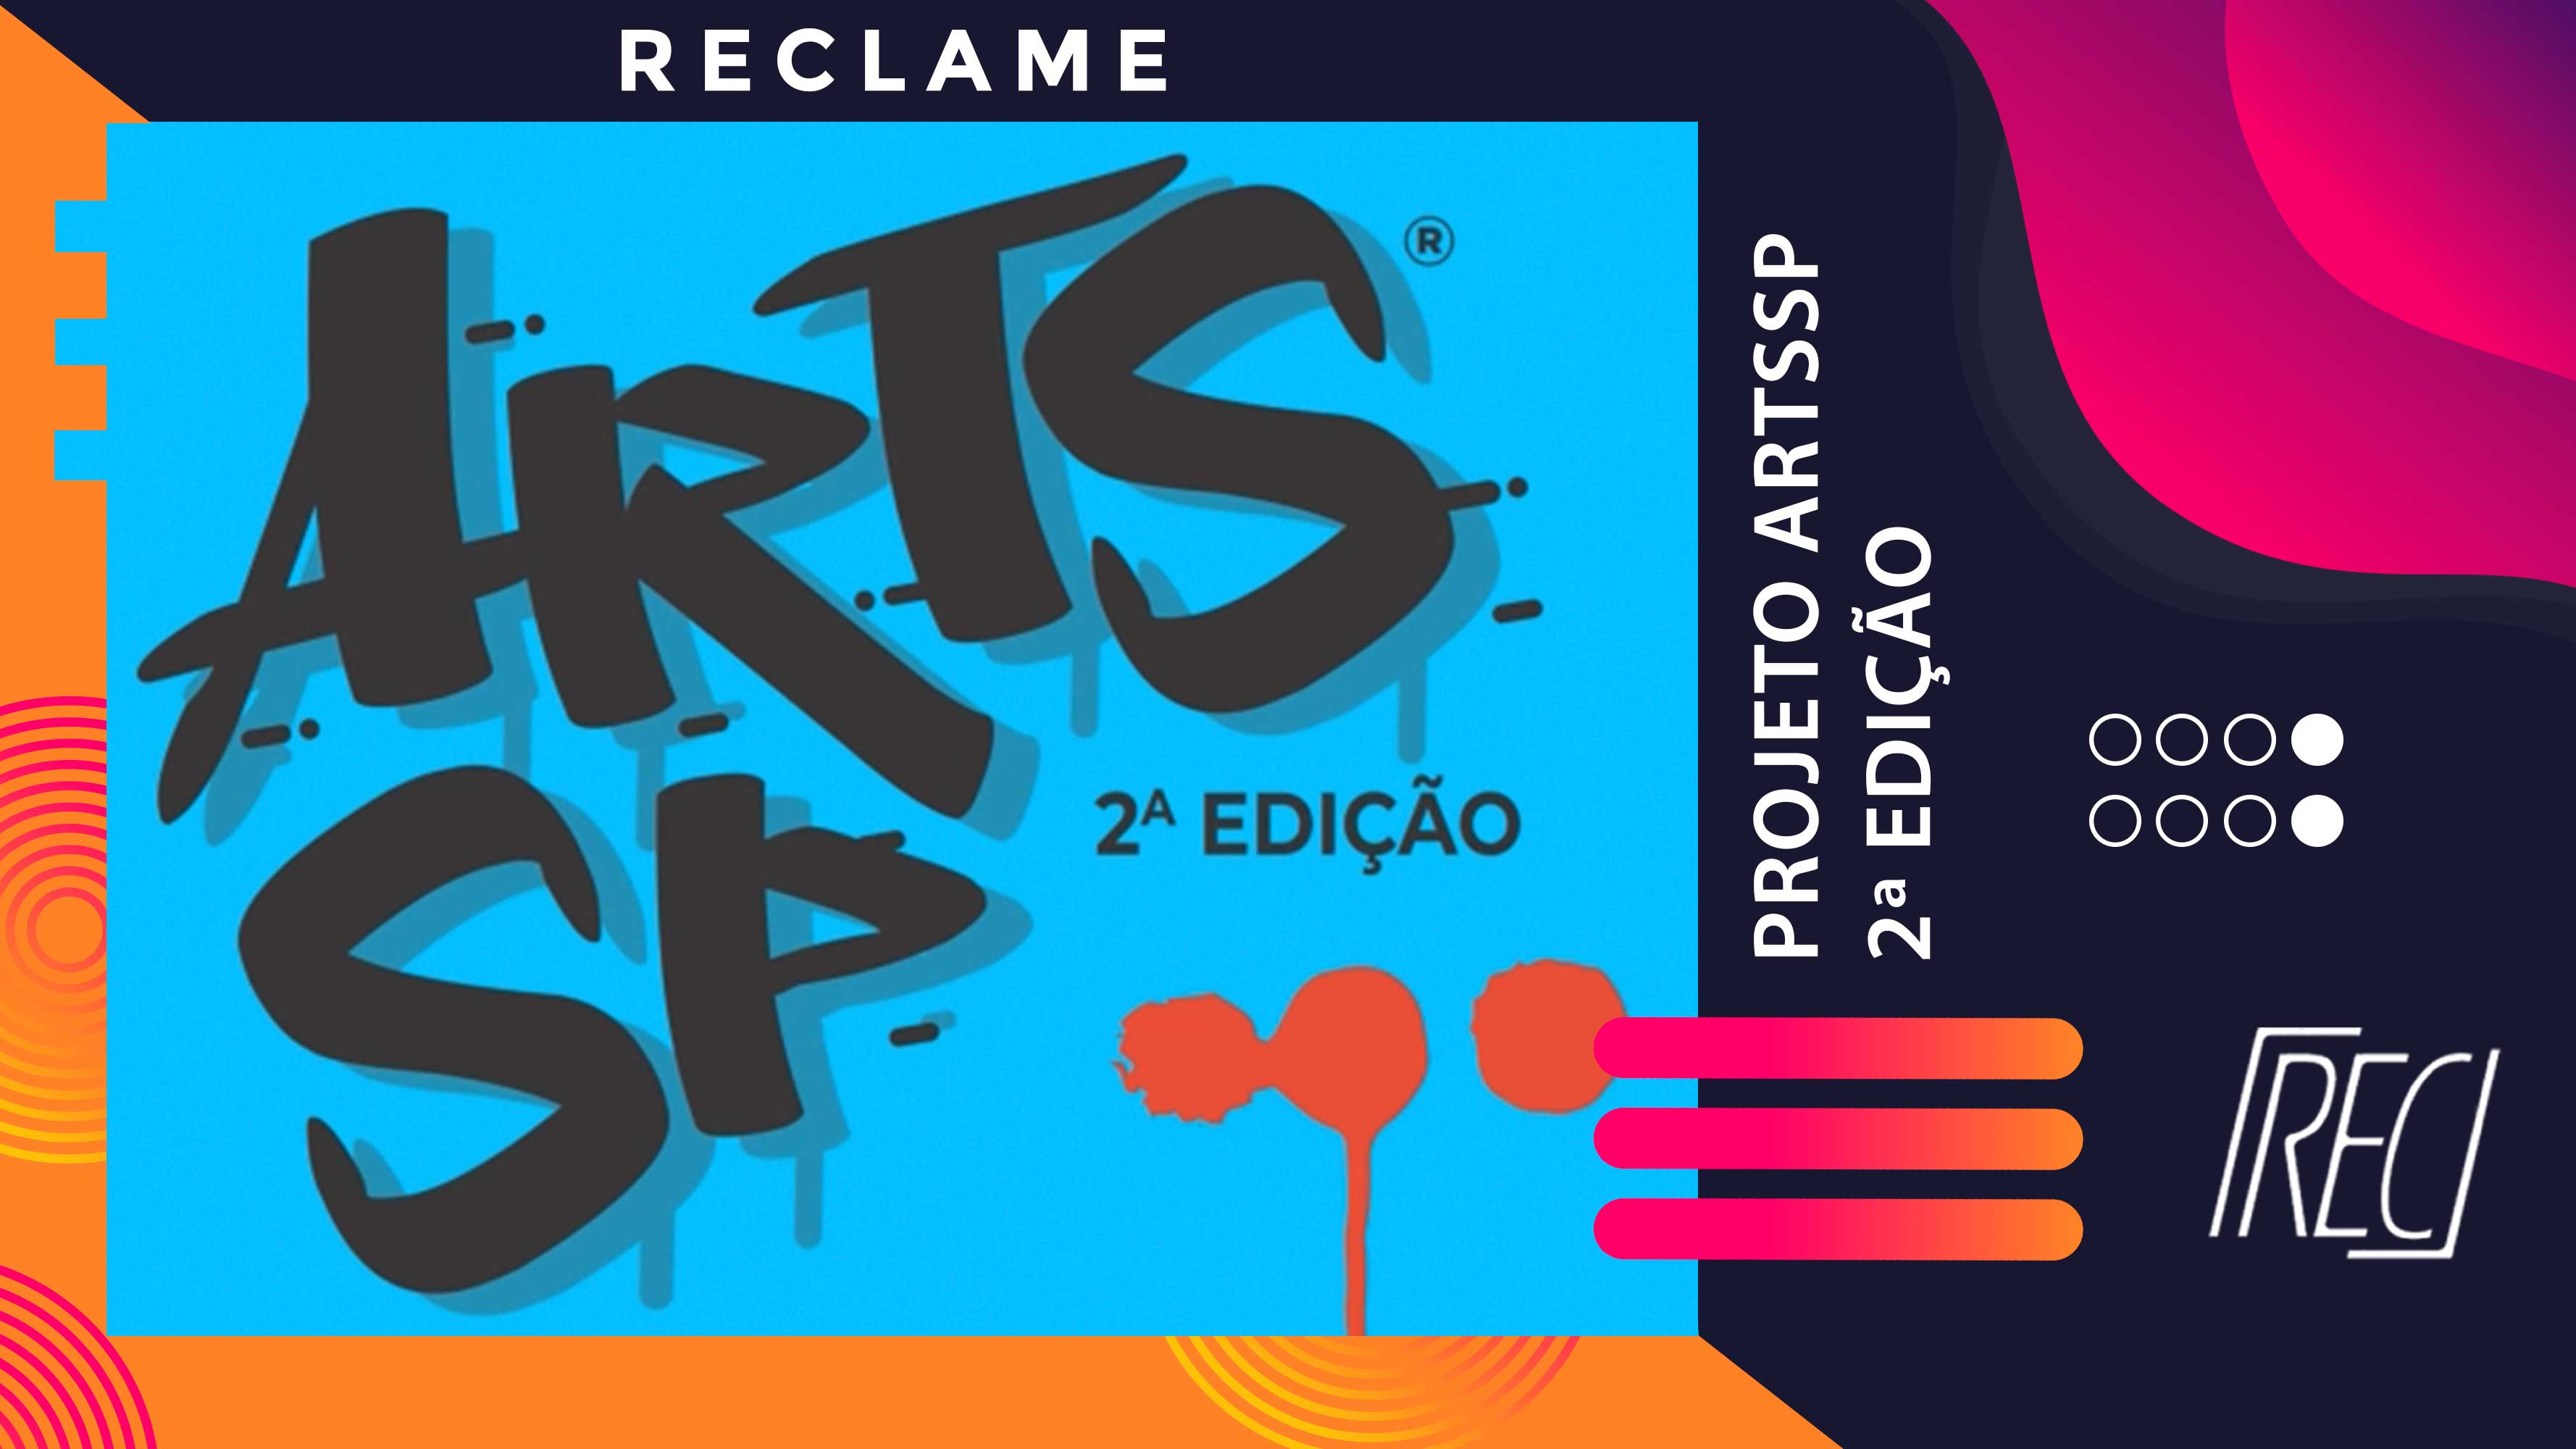 Reclame – Projeto ArtsSP 2022